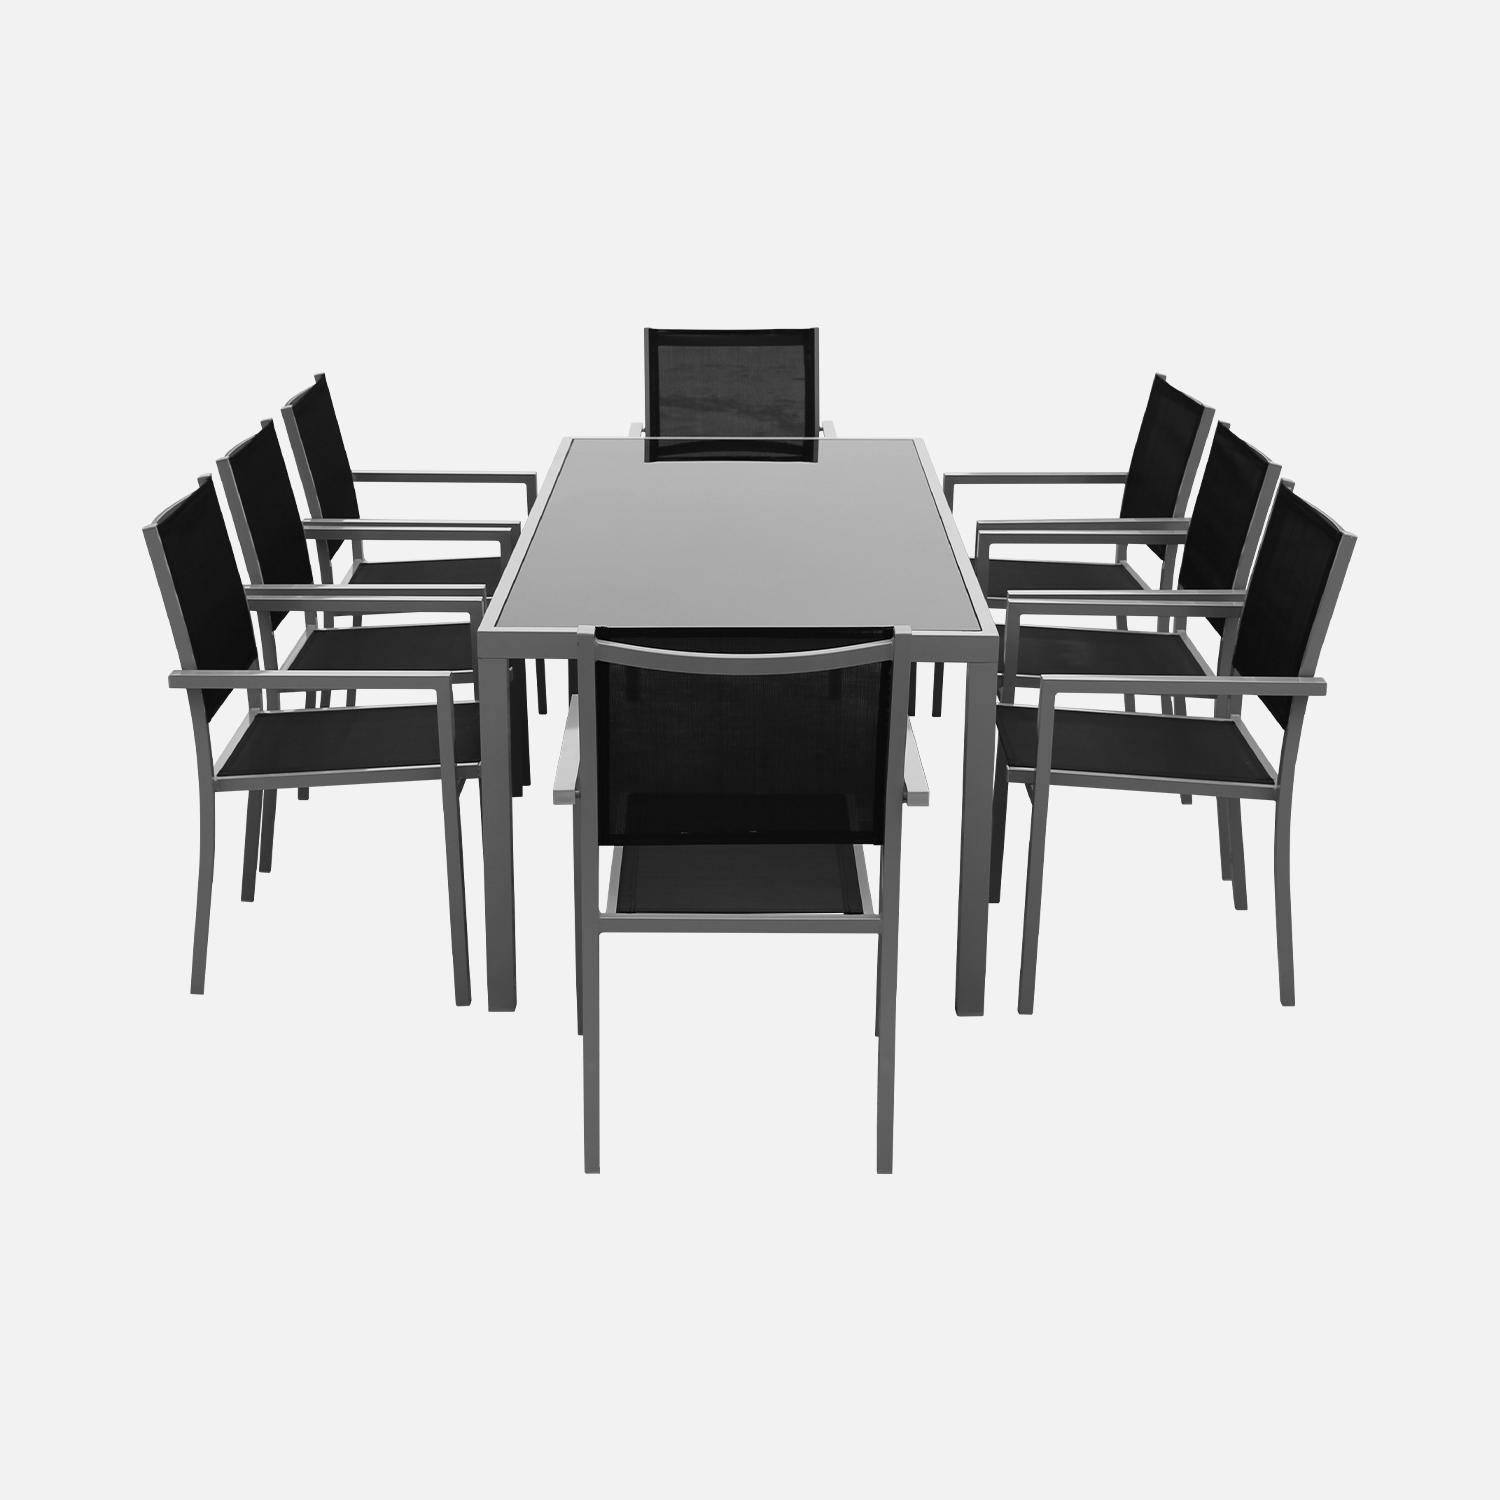 Gartengarnitur aus Aluminium und Textilene - Capua 180 cm - Grau, Schwarz - 8 Plätze - 1 großer rechteckiger Tisch, 8 stapelbare Sessel Photo4